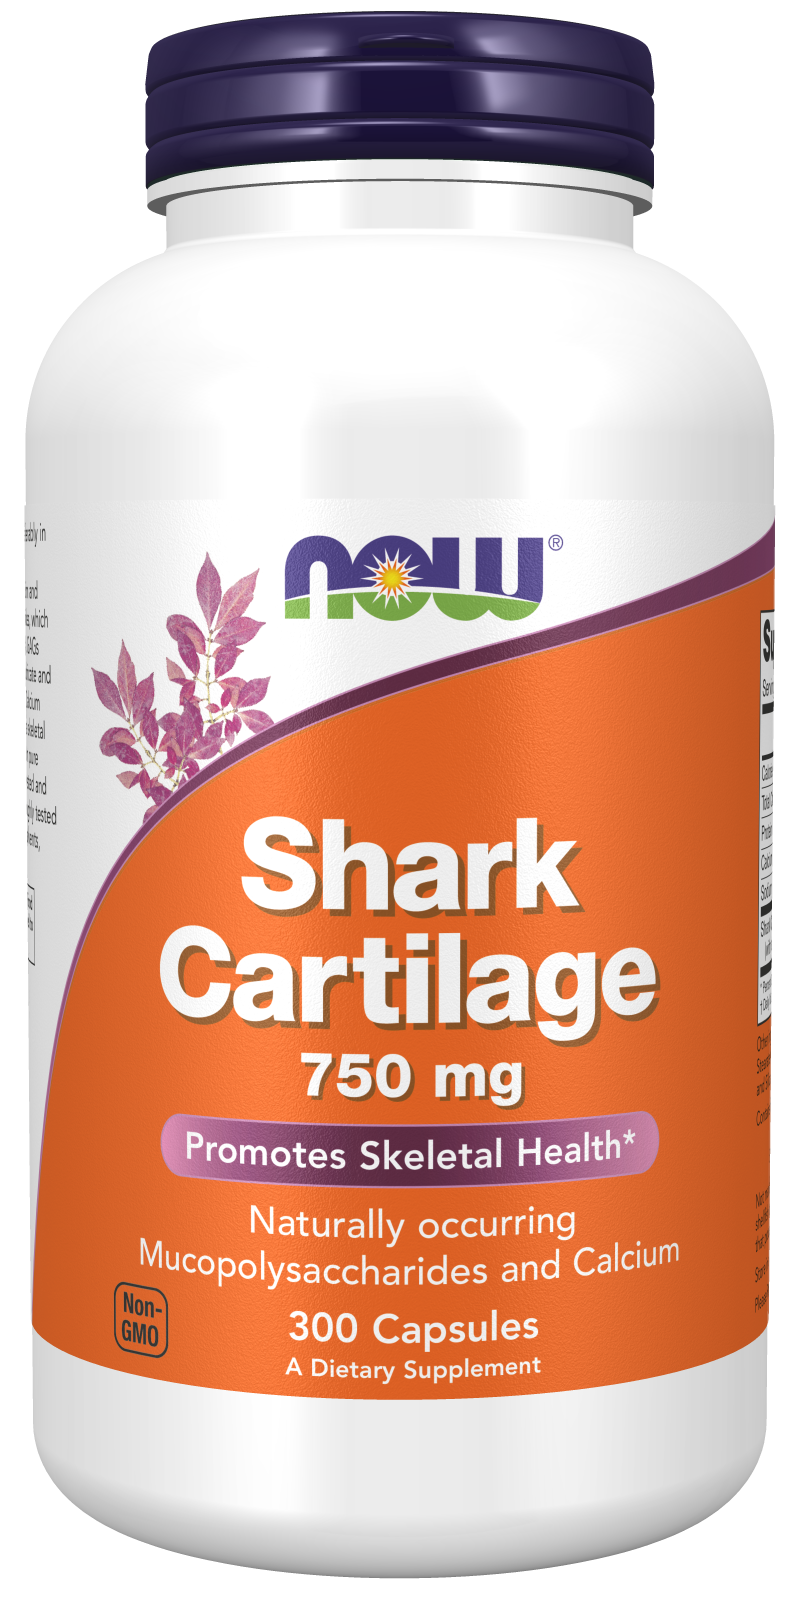 Shark Cartilage 750 mg - 300 Capsules Bottle